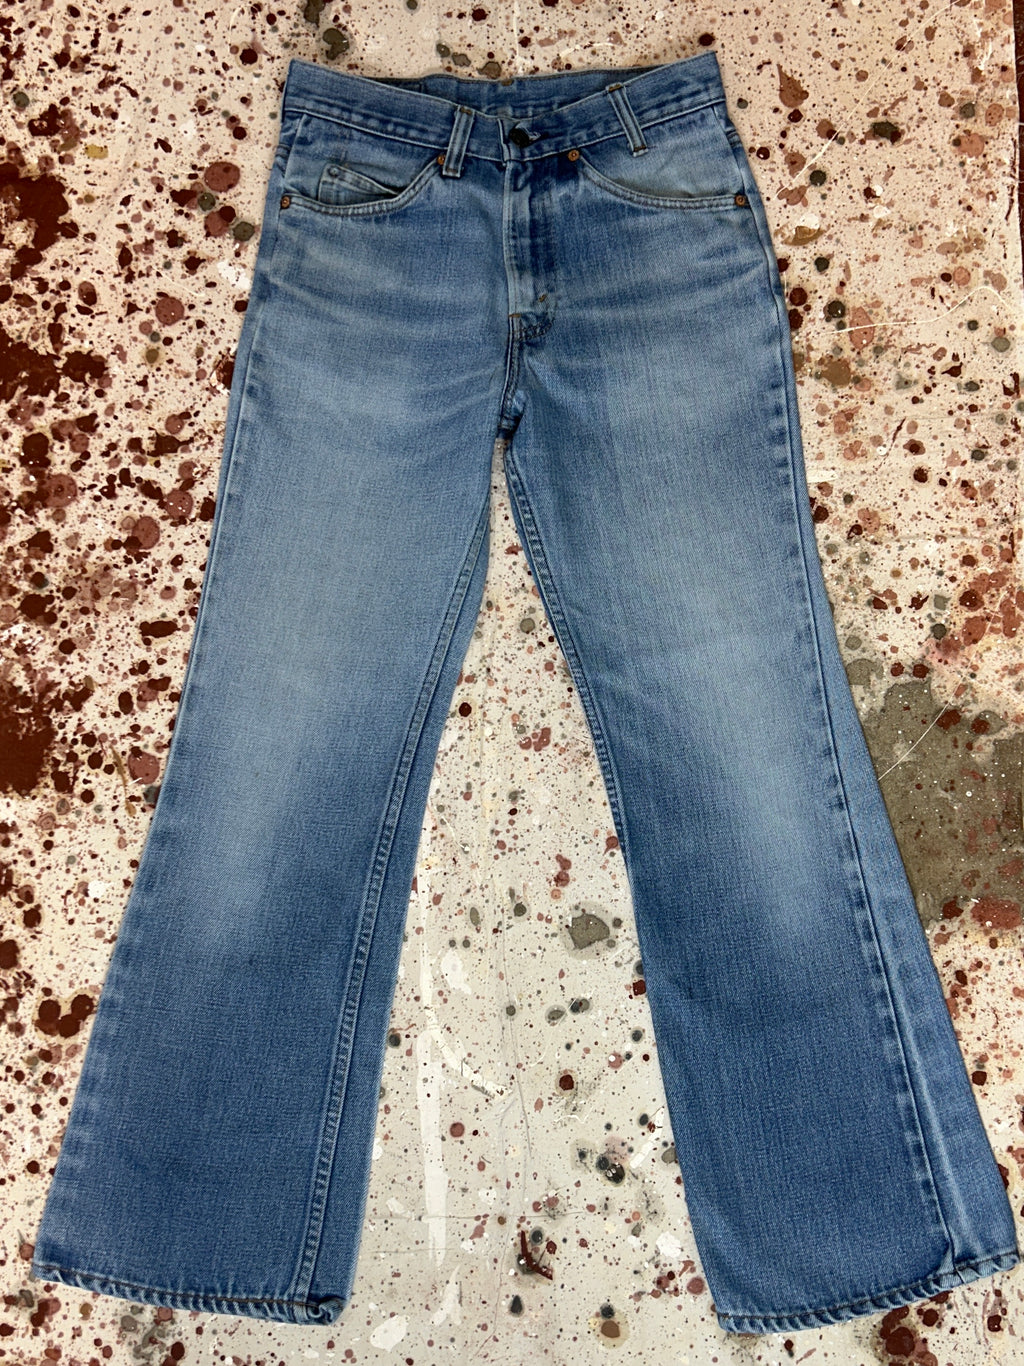 Vintage USA Levi's 517 Talon Zip Orange Tab Premium Wash Denim Jeans (JYJ0424-171)